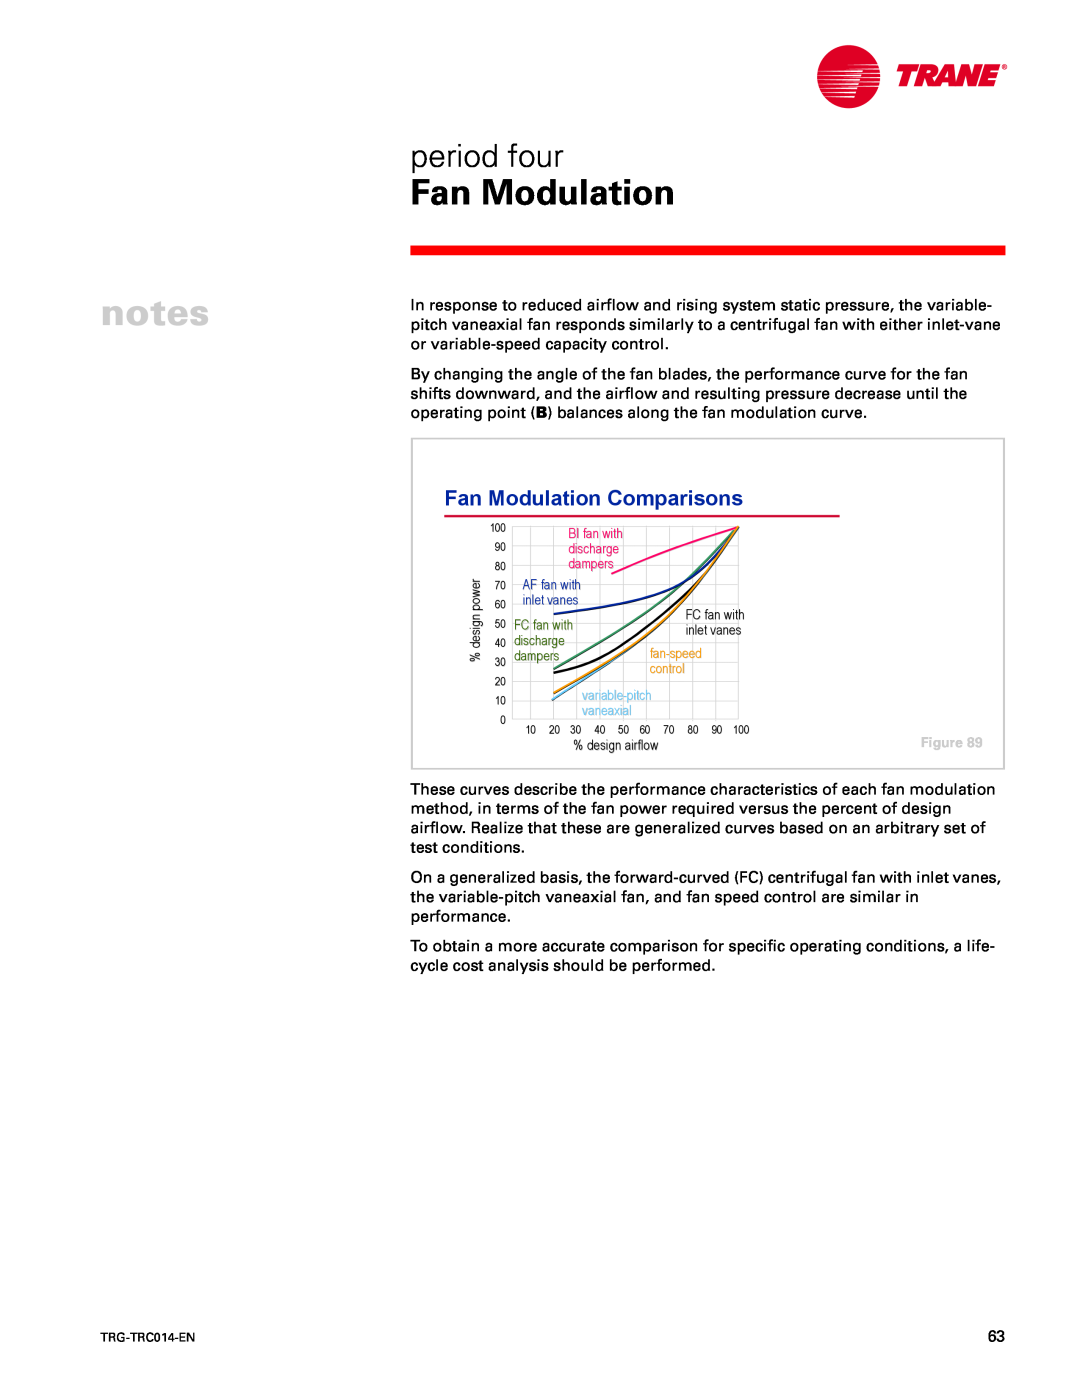 Trane TRG-TRC014-EN manual Fan Modulation Comparisons, period four 